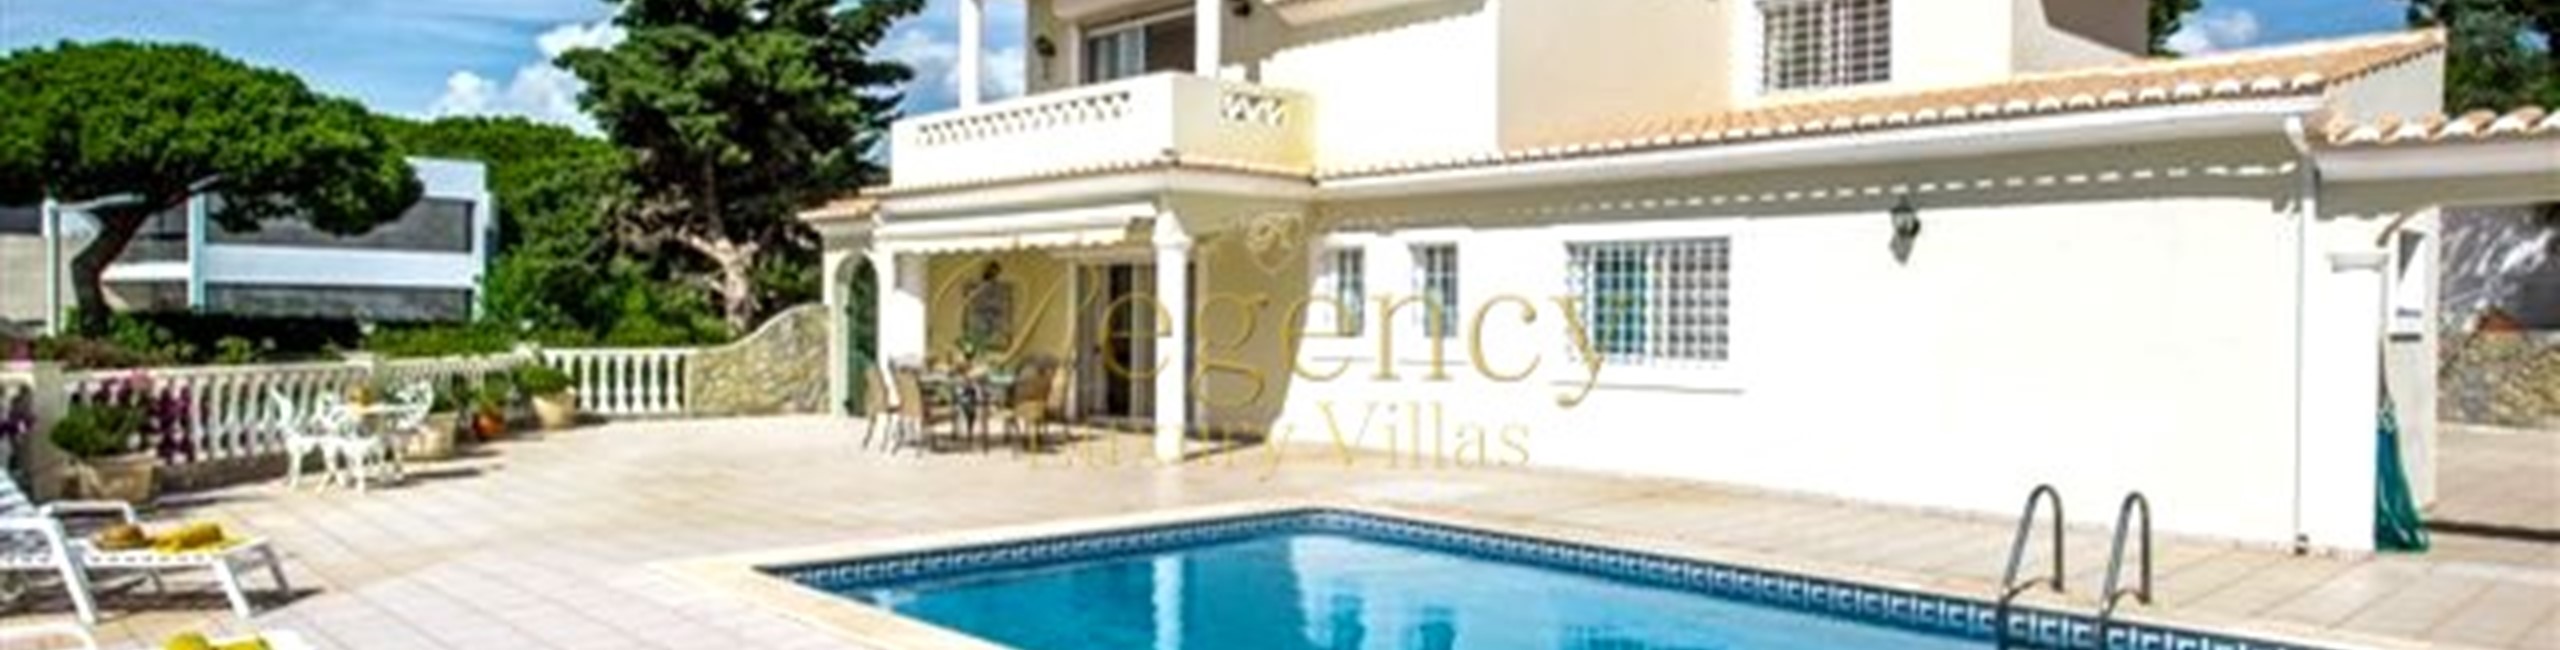 Vale Do Lobo Luxury Property Rentals 4 Bedroom With Pool Portugal Regency Luxury Villas 1